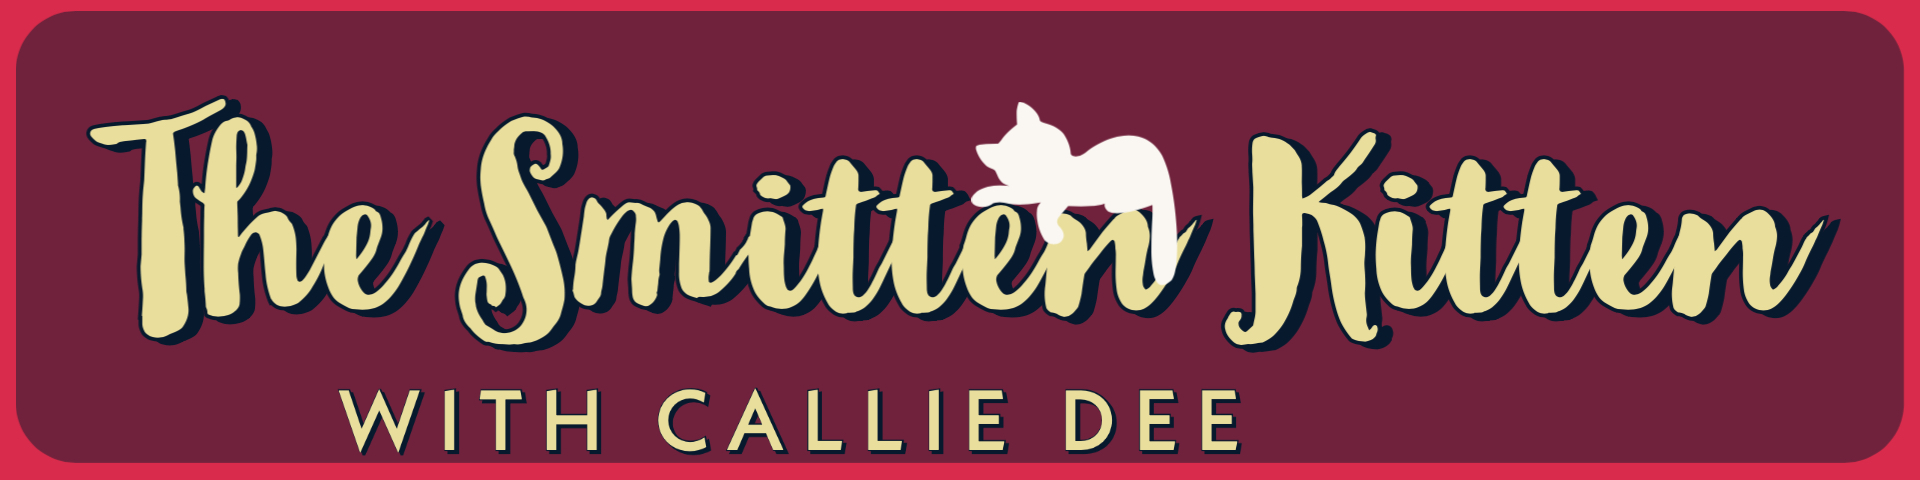 The Smitten Kitten with Callie Dee